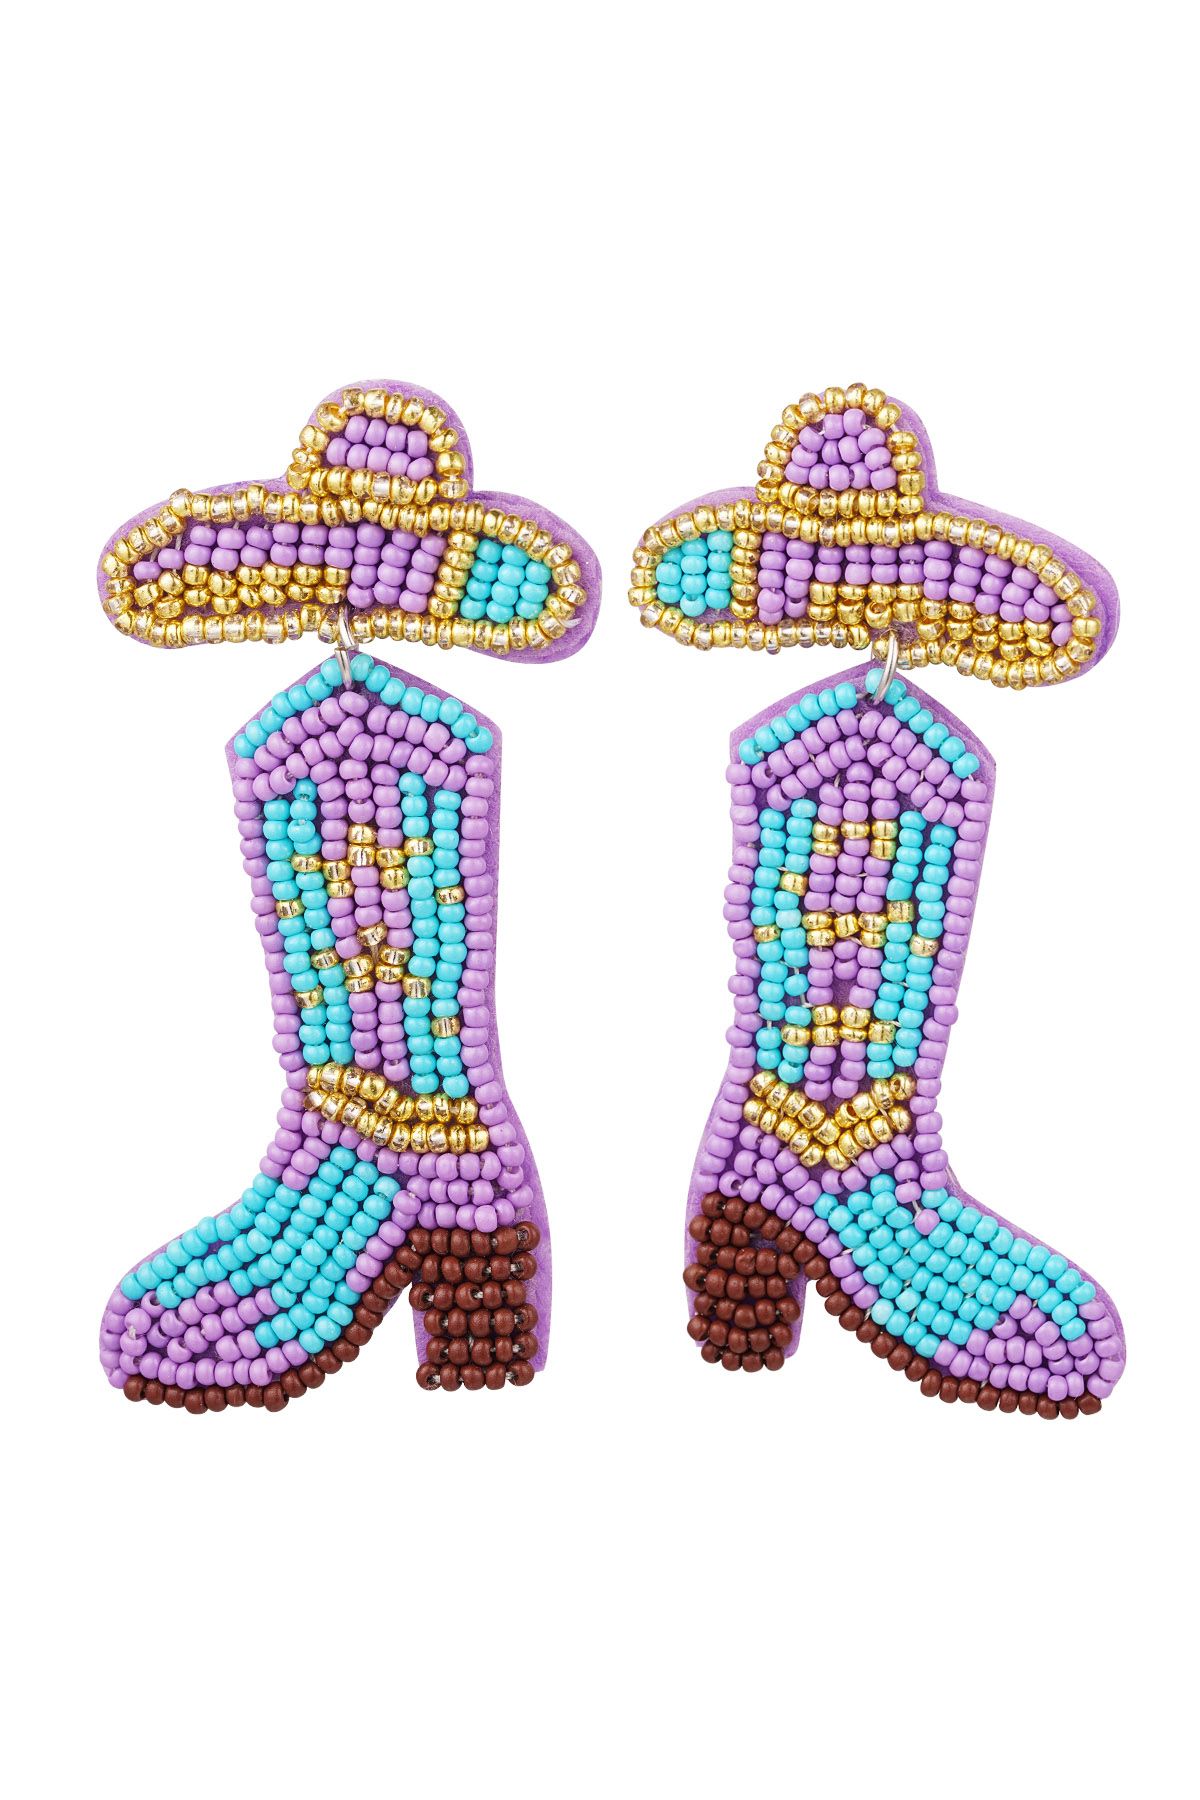 Beaded earrings boots - blue Glass beads